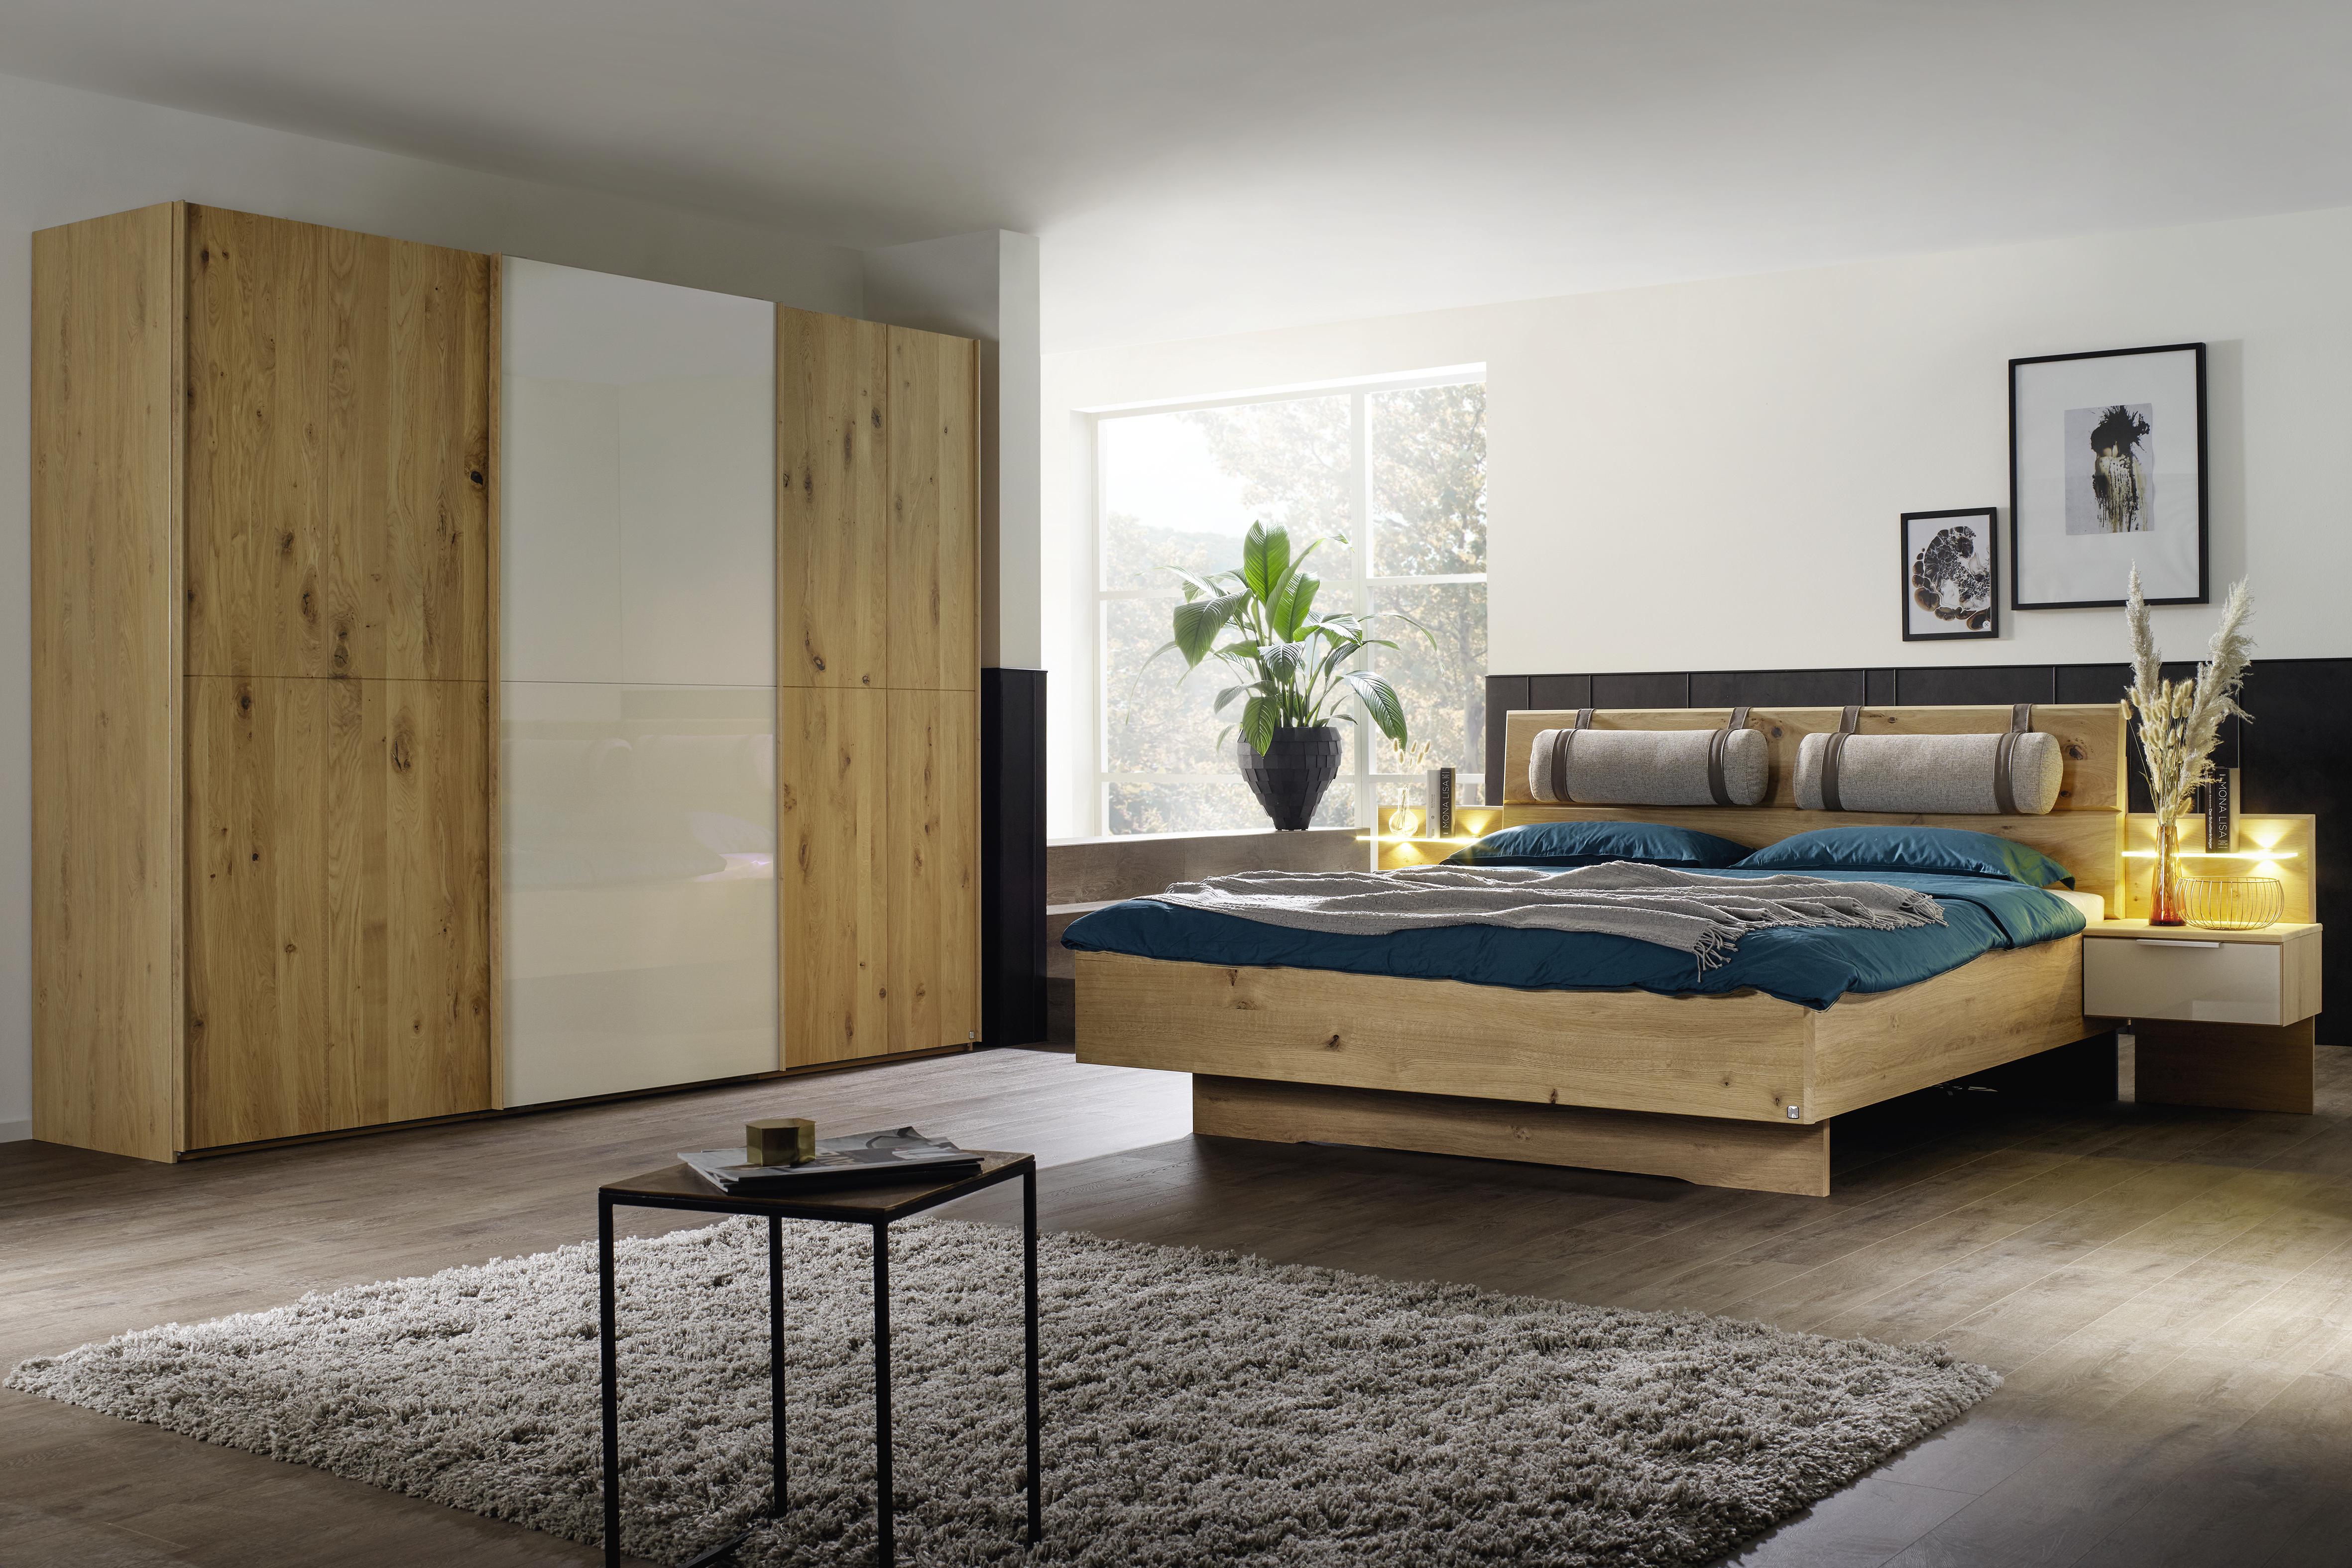 wooden cabinet - bed - nightstand